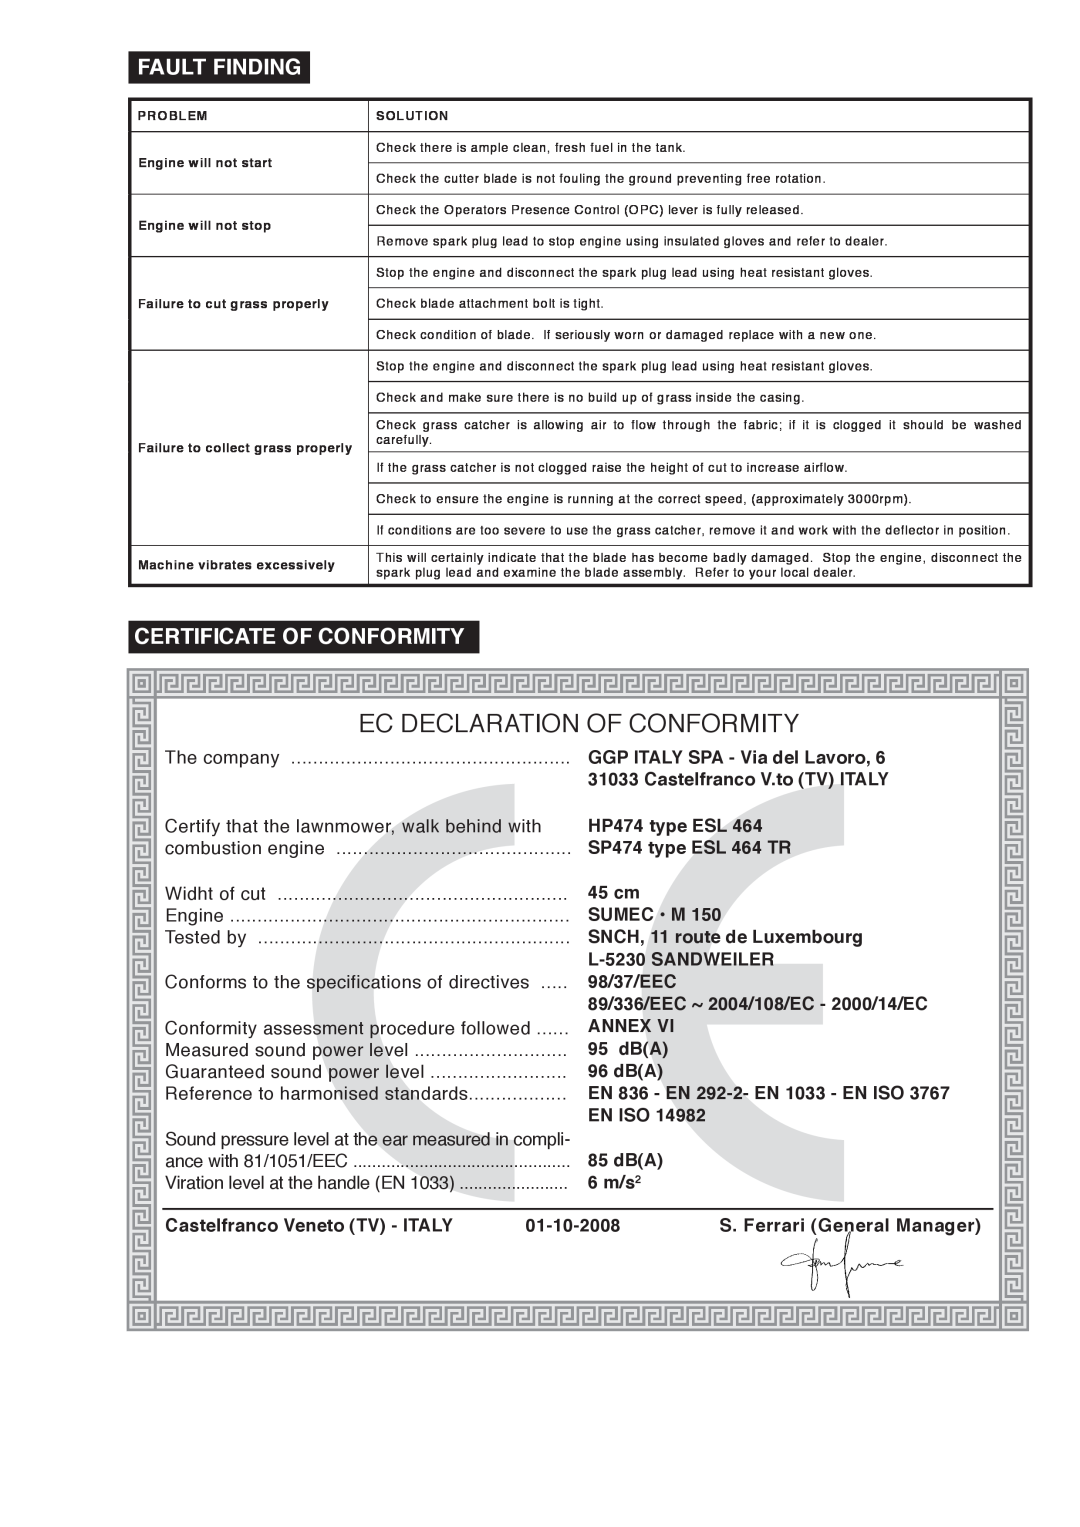 Mountfield SP474 manual Fault Finding, Certificate Of Conformity, Ec Declaration Of Conformity 